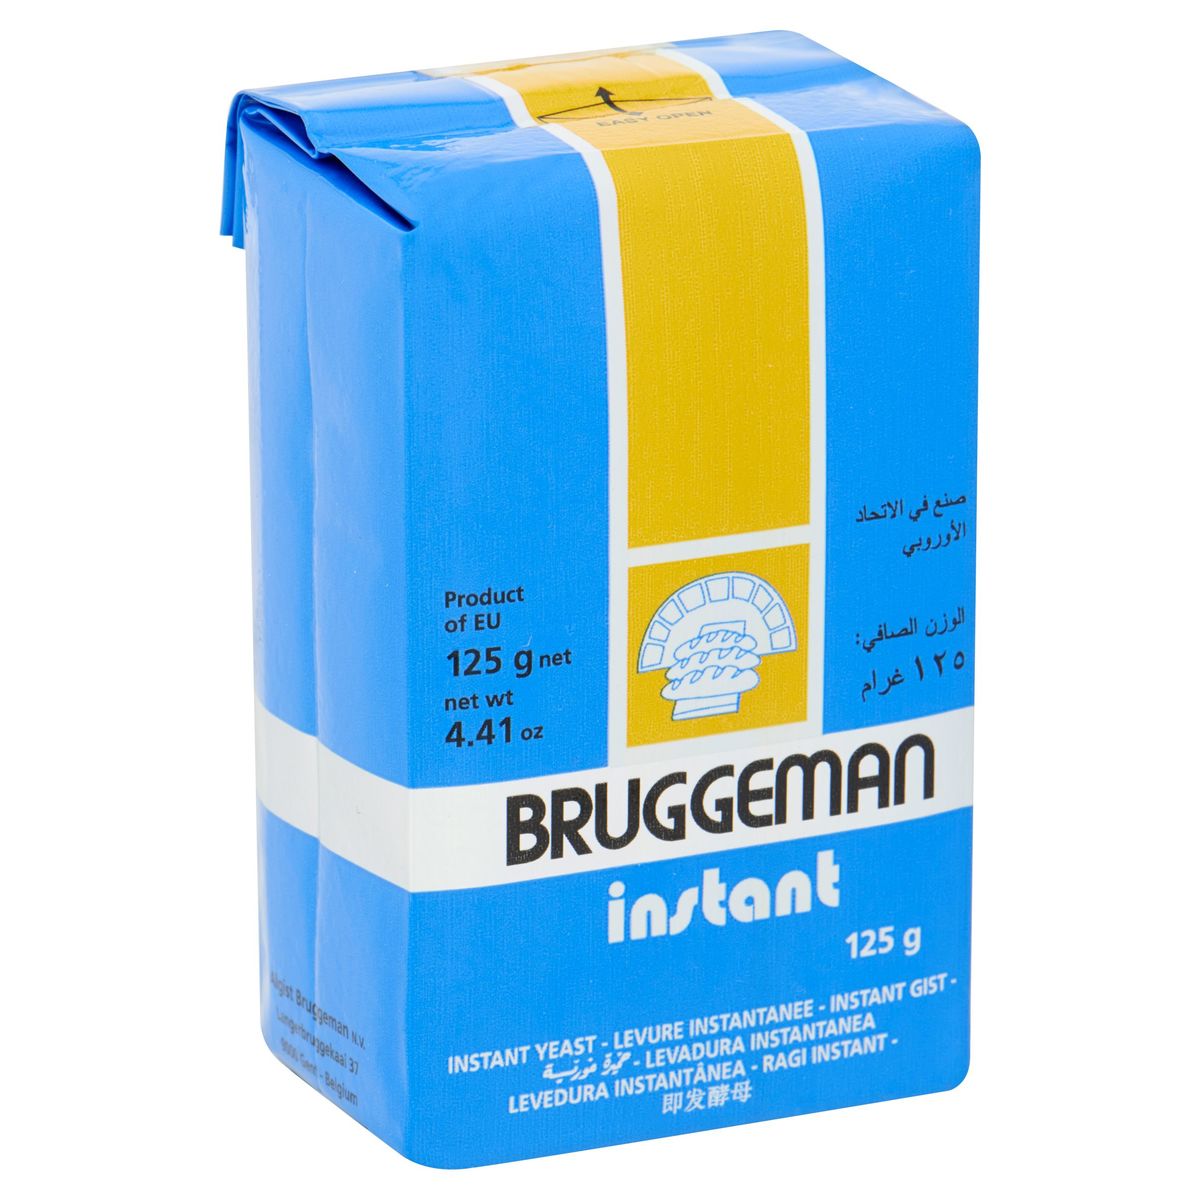 Bruggeman Instant Gist 125 g